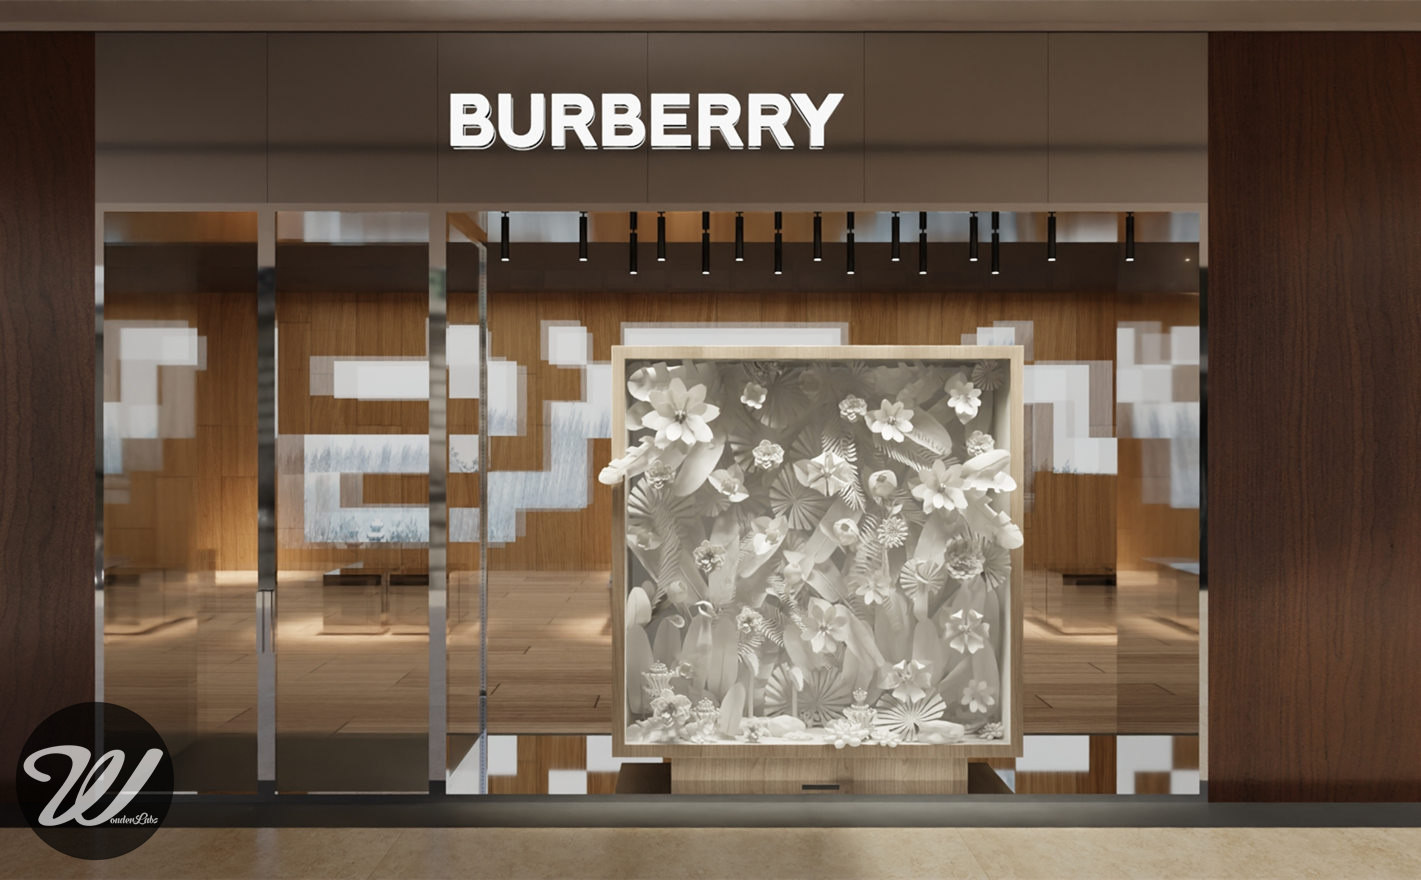 BURBERRY ARTISTIC WINDOW DISPLAY